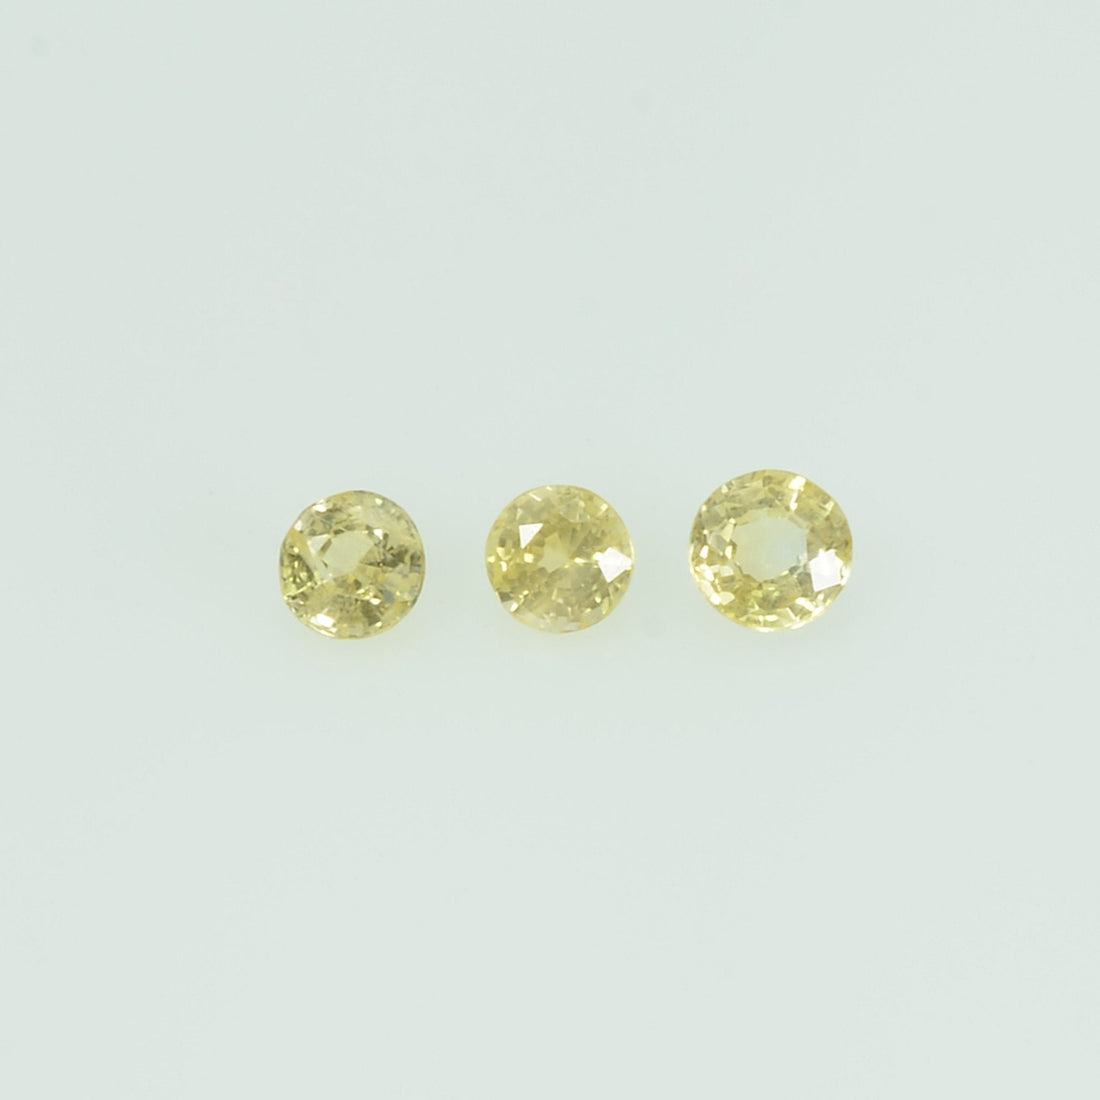 2.5 mm Natural Yellow Sapphire Loose Gemstone Round Cut